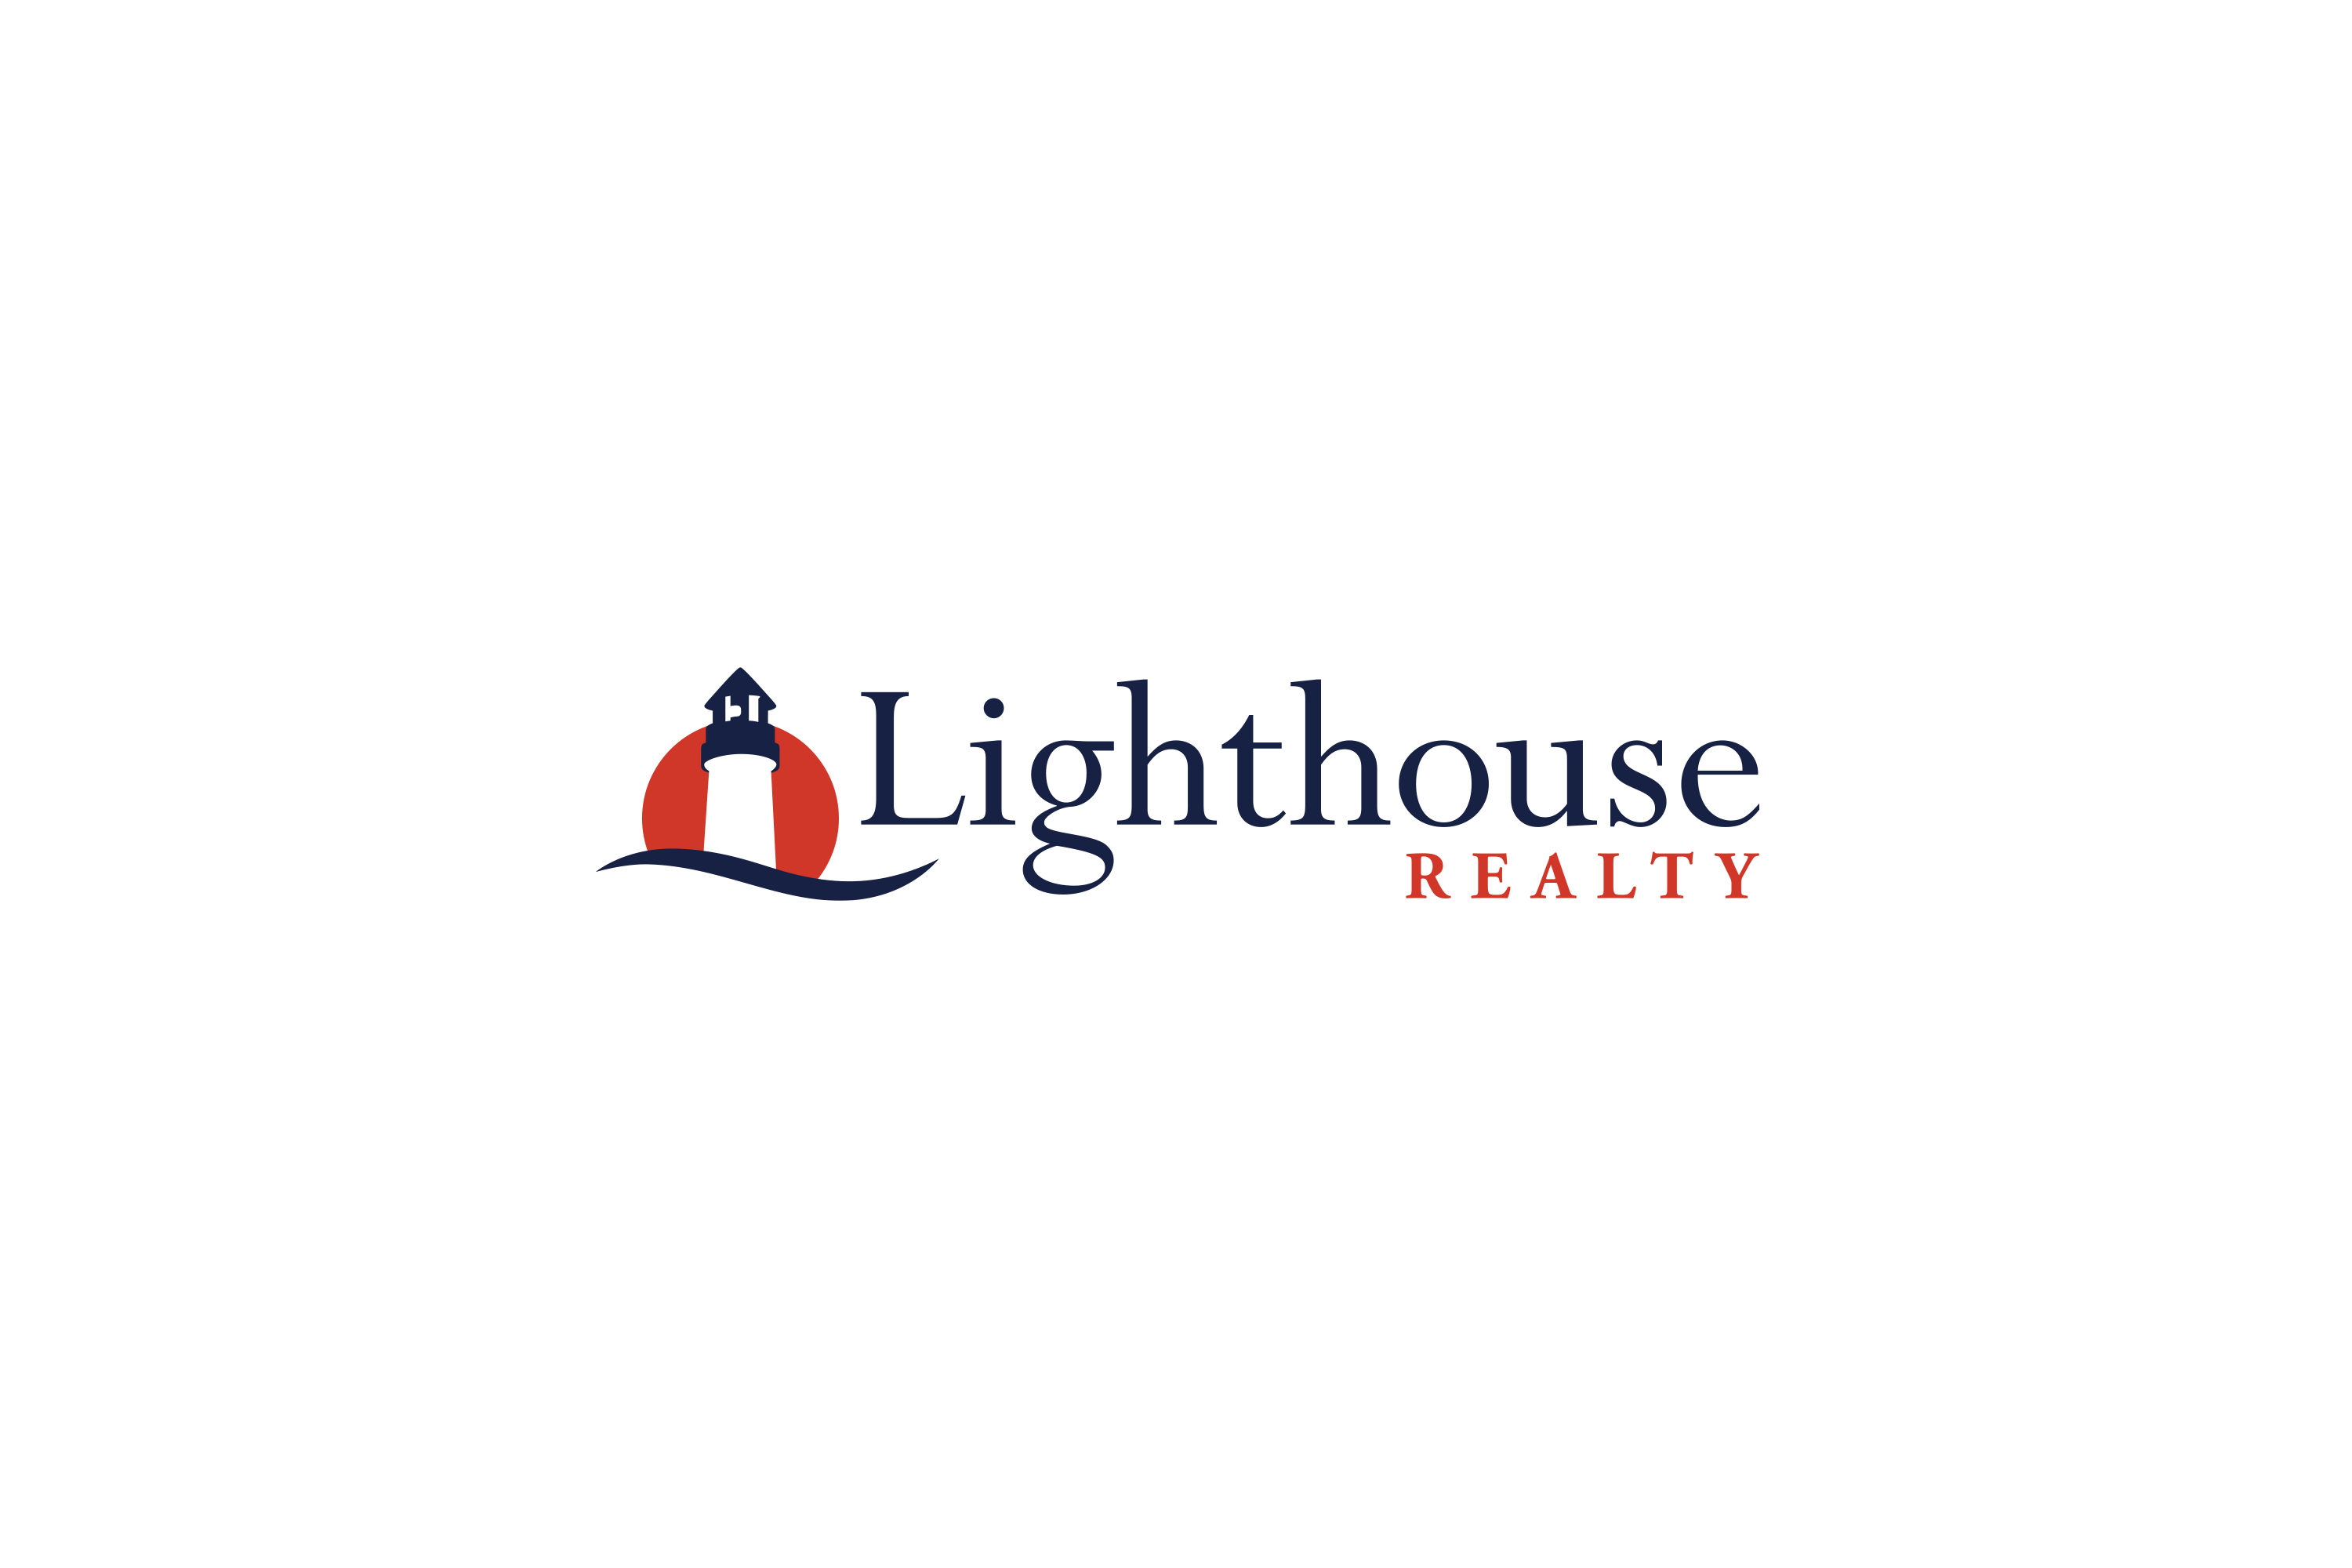 Chris-Reynolds-Logos-Lighthouse-Realty-1